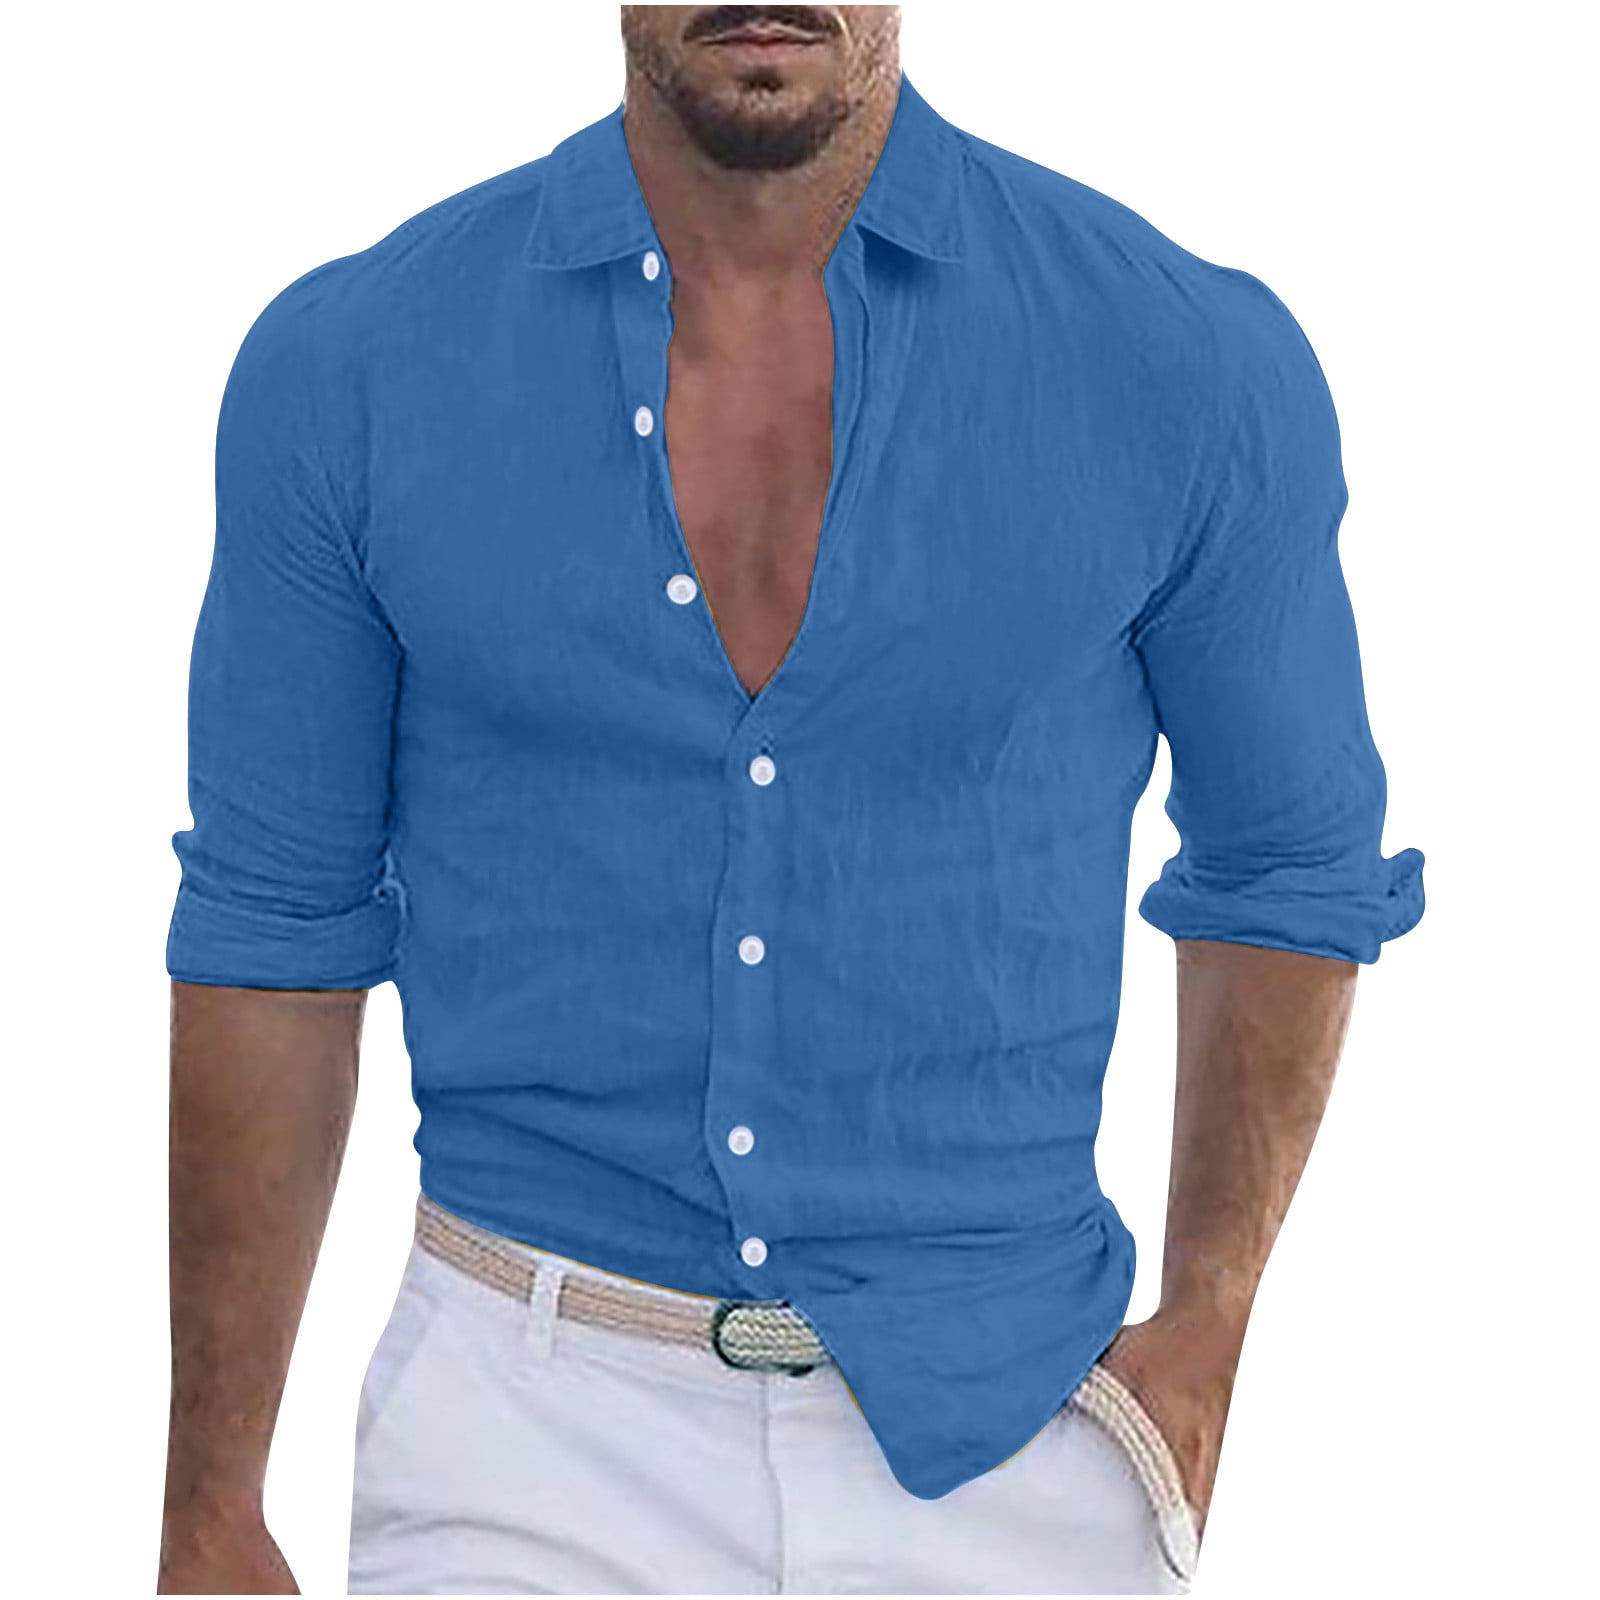  Callcarl Long Sleeve Shirts for Men, Men's Long Sleeve Cotton  Linen Shirt Button Up Casual Summer Button Down Beach Yoga Tops Blue :  Sports & Outdoors